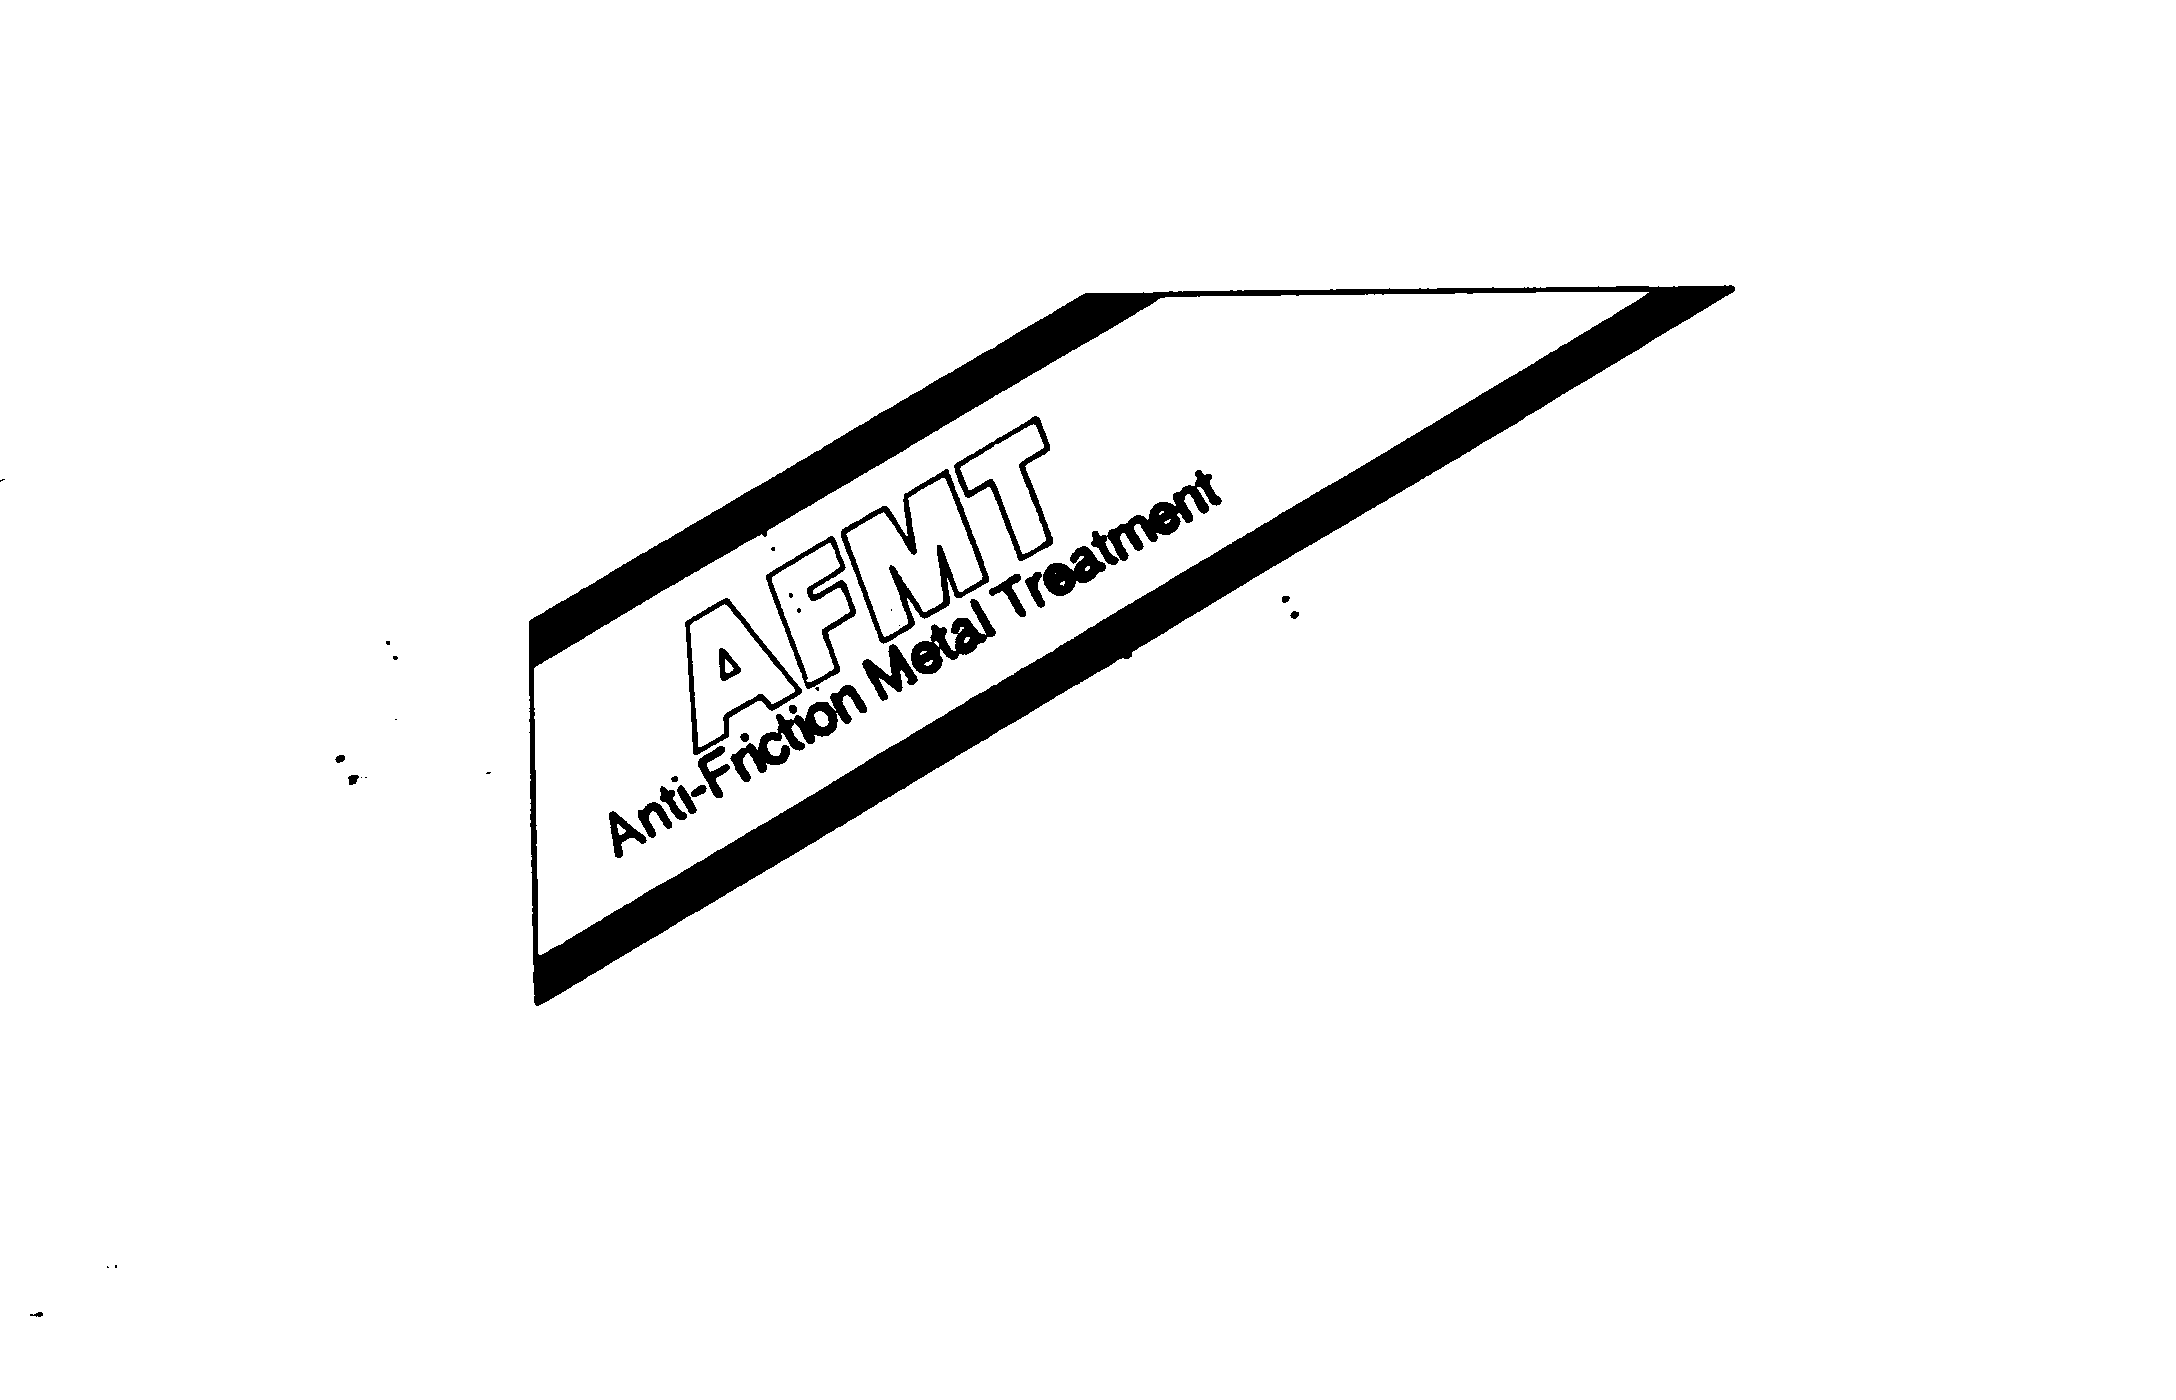  AFMT ANTI-FRICTION METAL TREATMENT